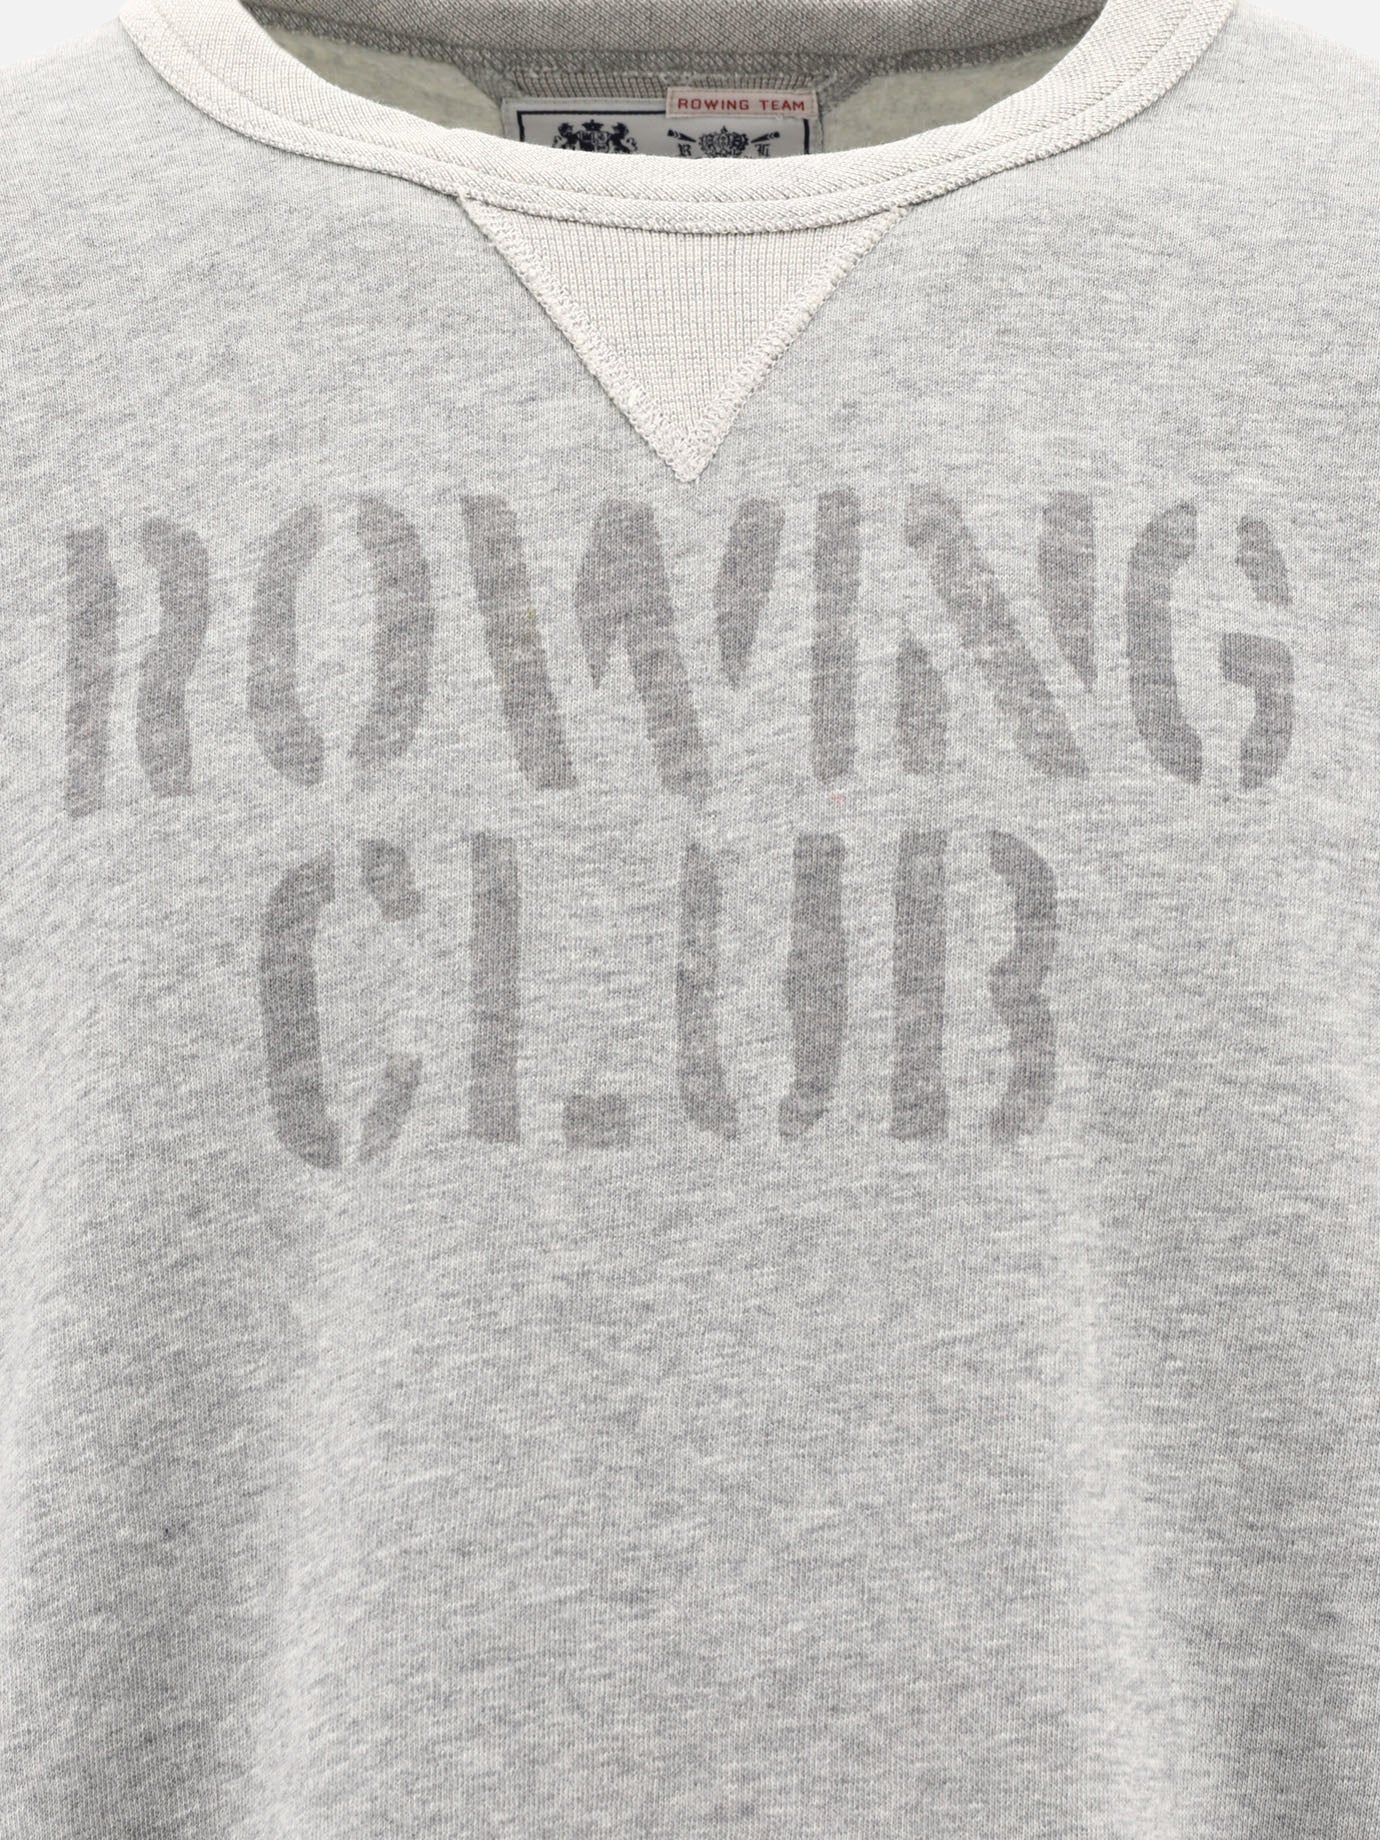 "Rowing Club" sweatshirt